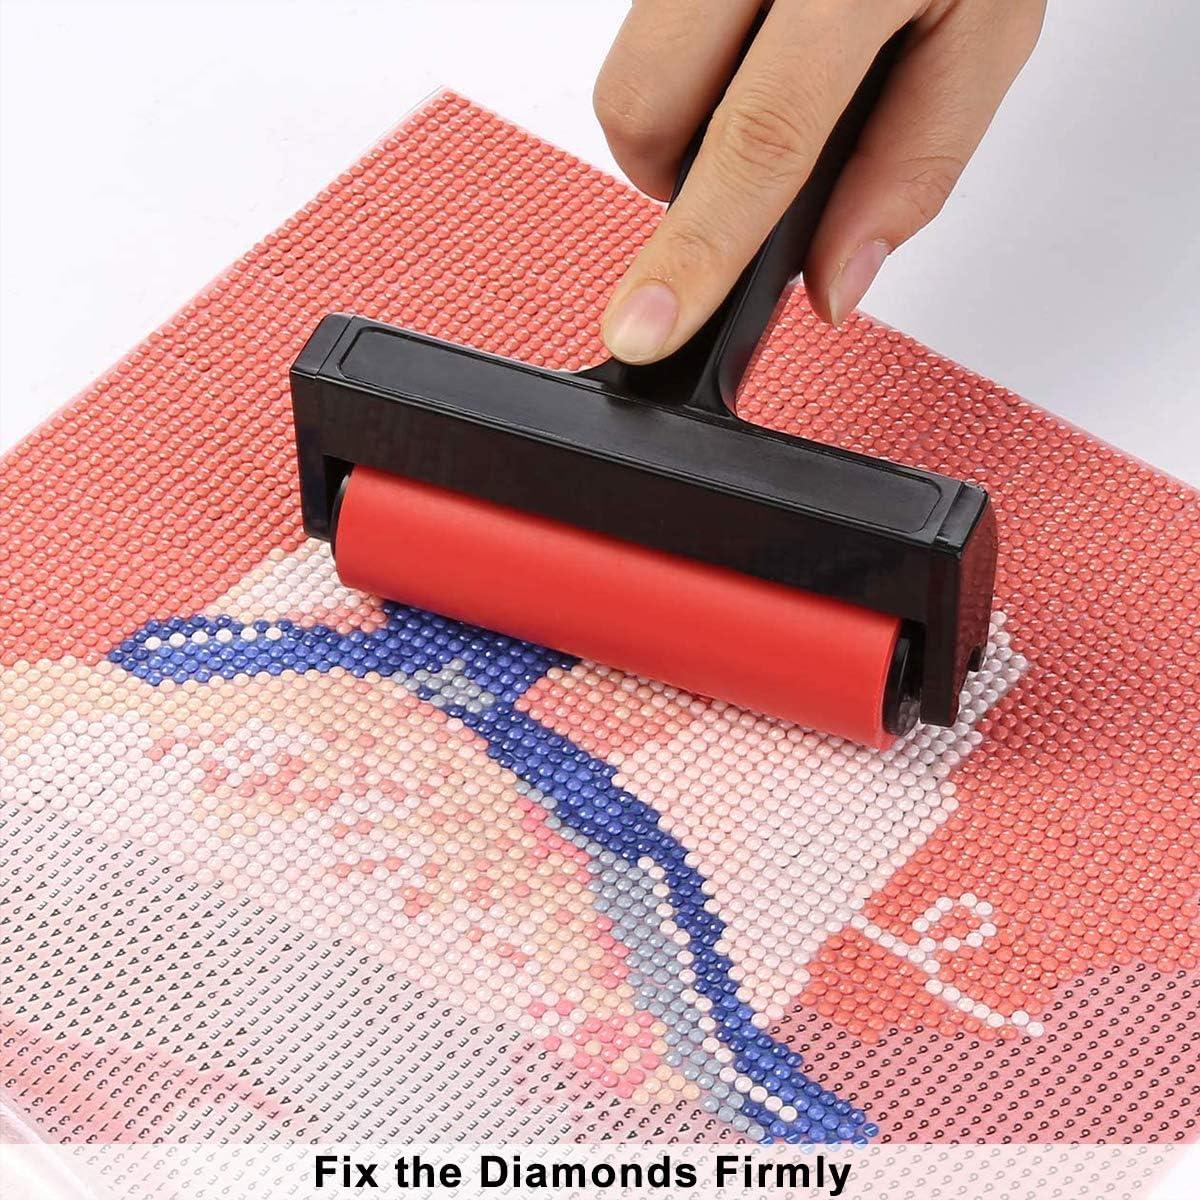 New 5D diamond painting accessories tools kit for diamond